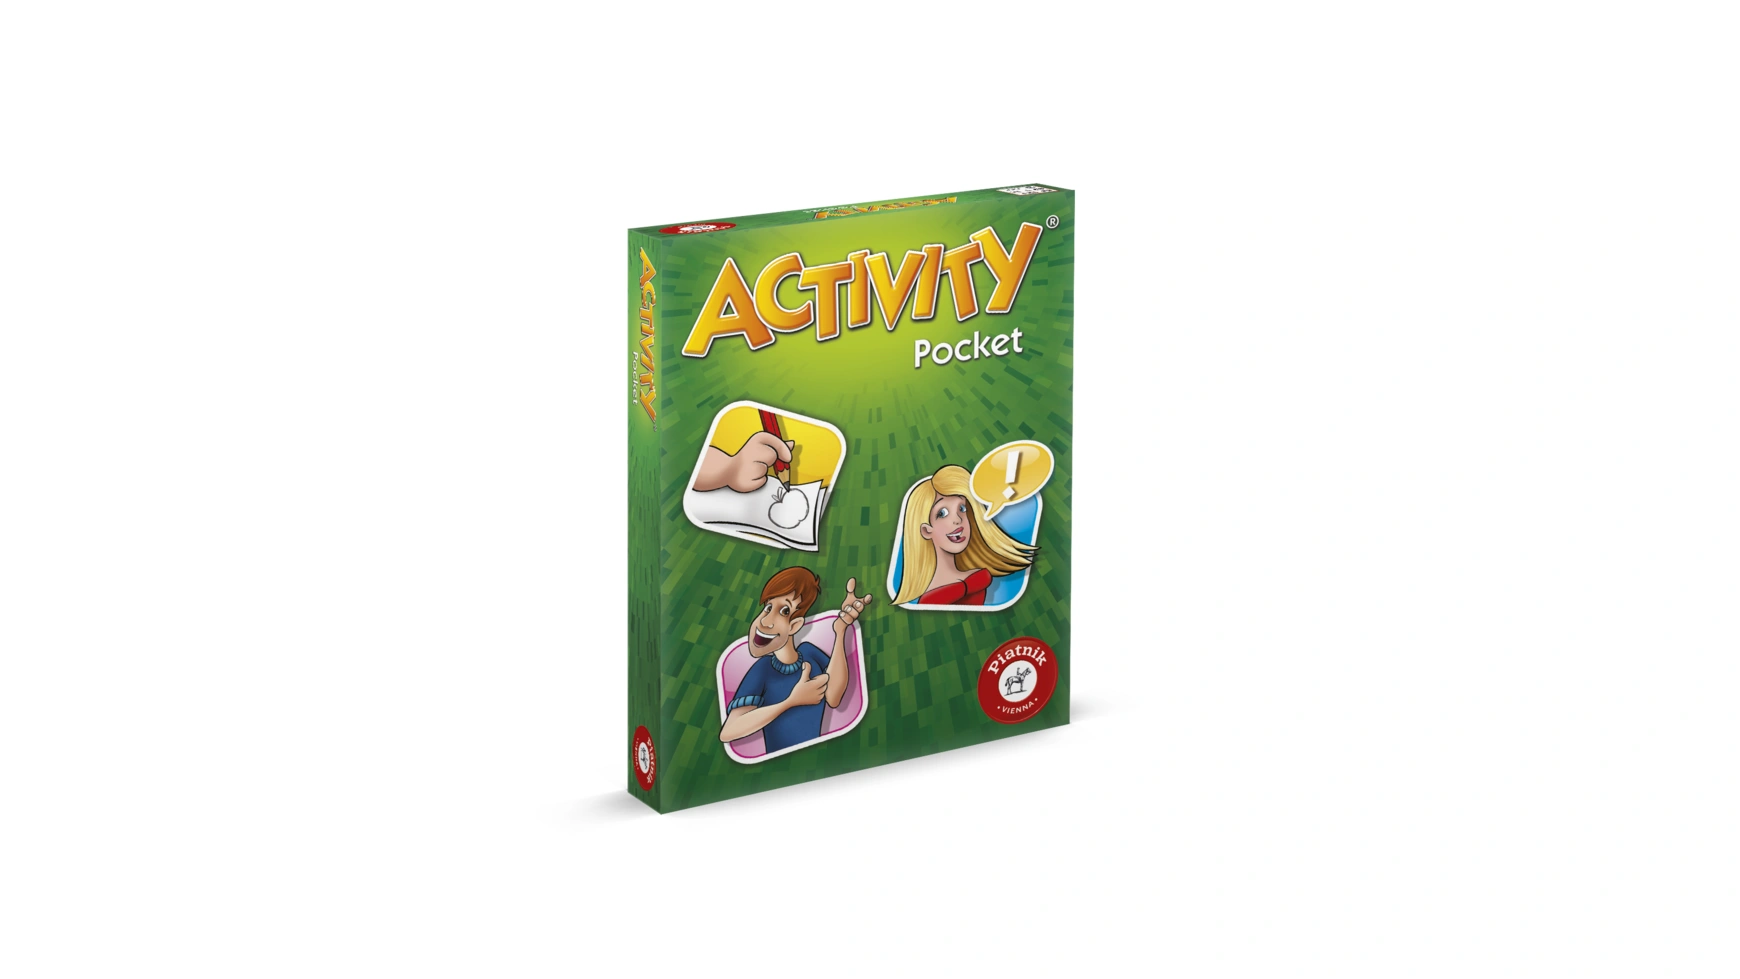 Activity pocket Piatnik travel activity book